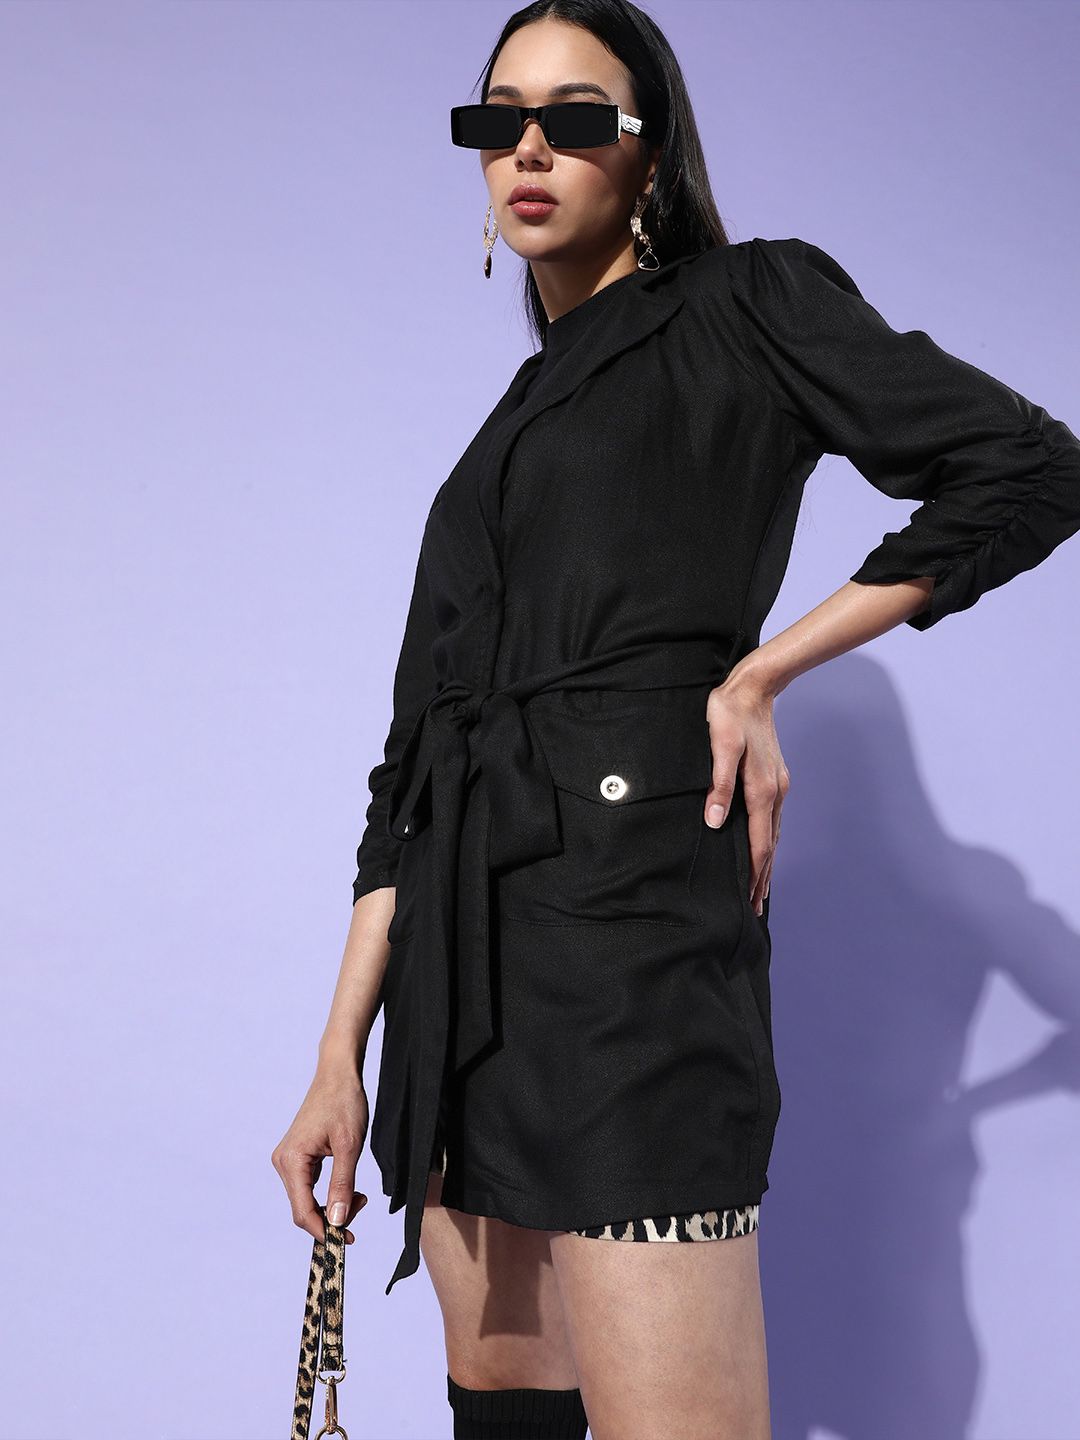 ANI Women Stylish Black Solid Polyviscose Blazer Price in India